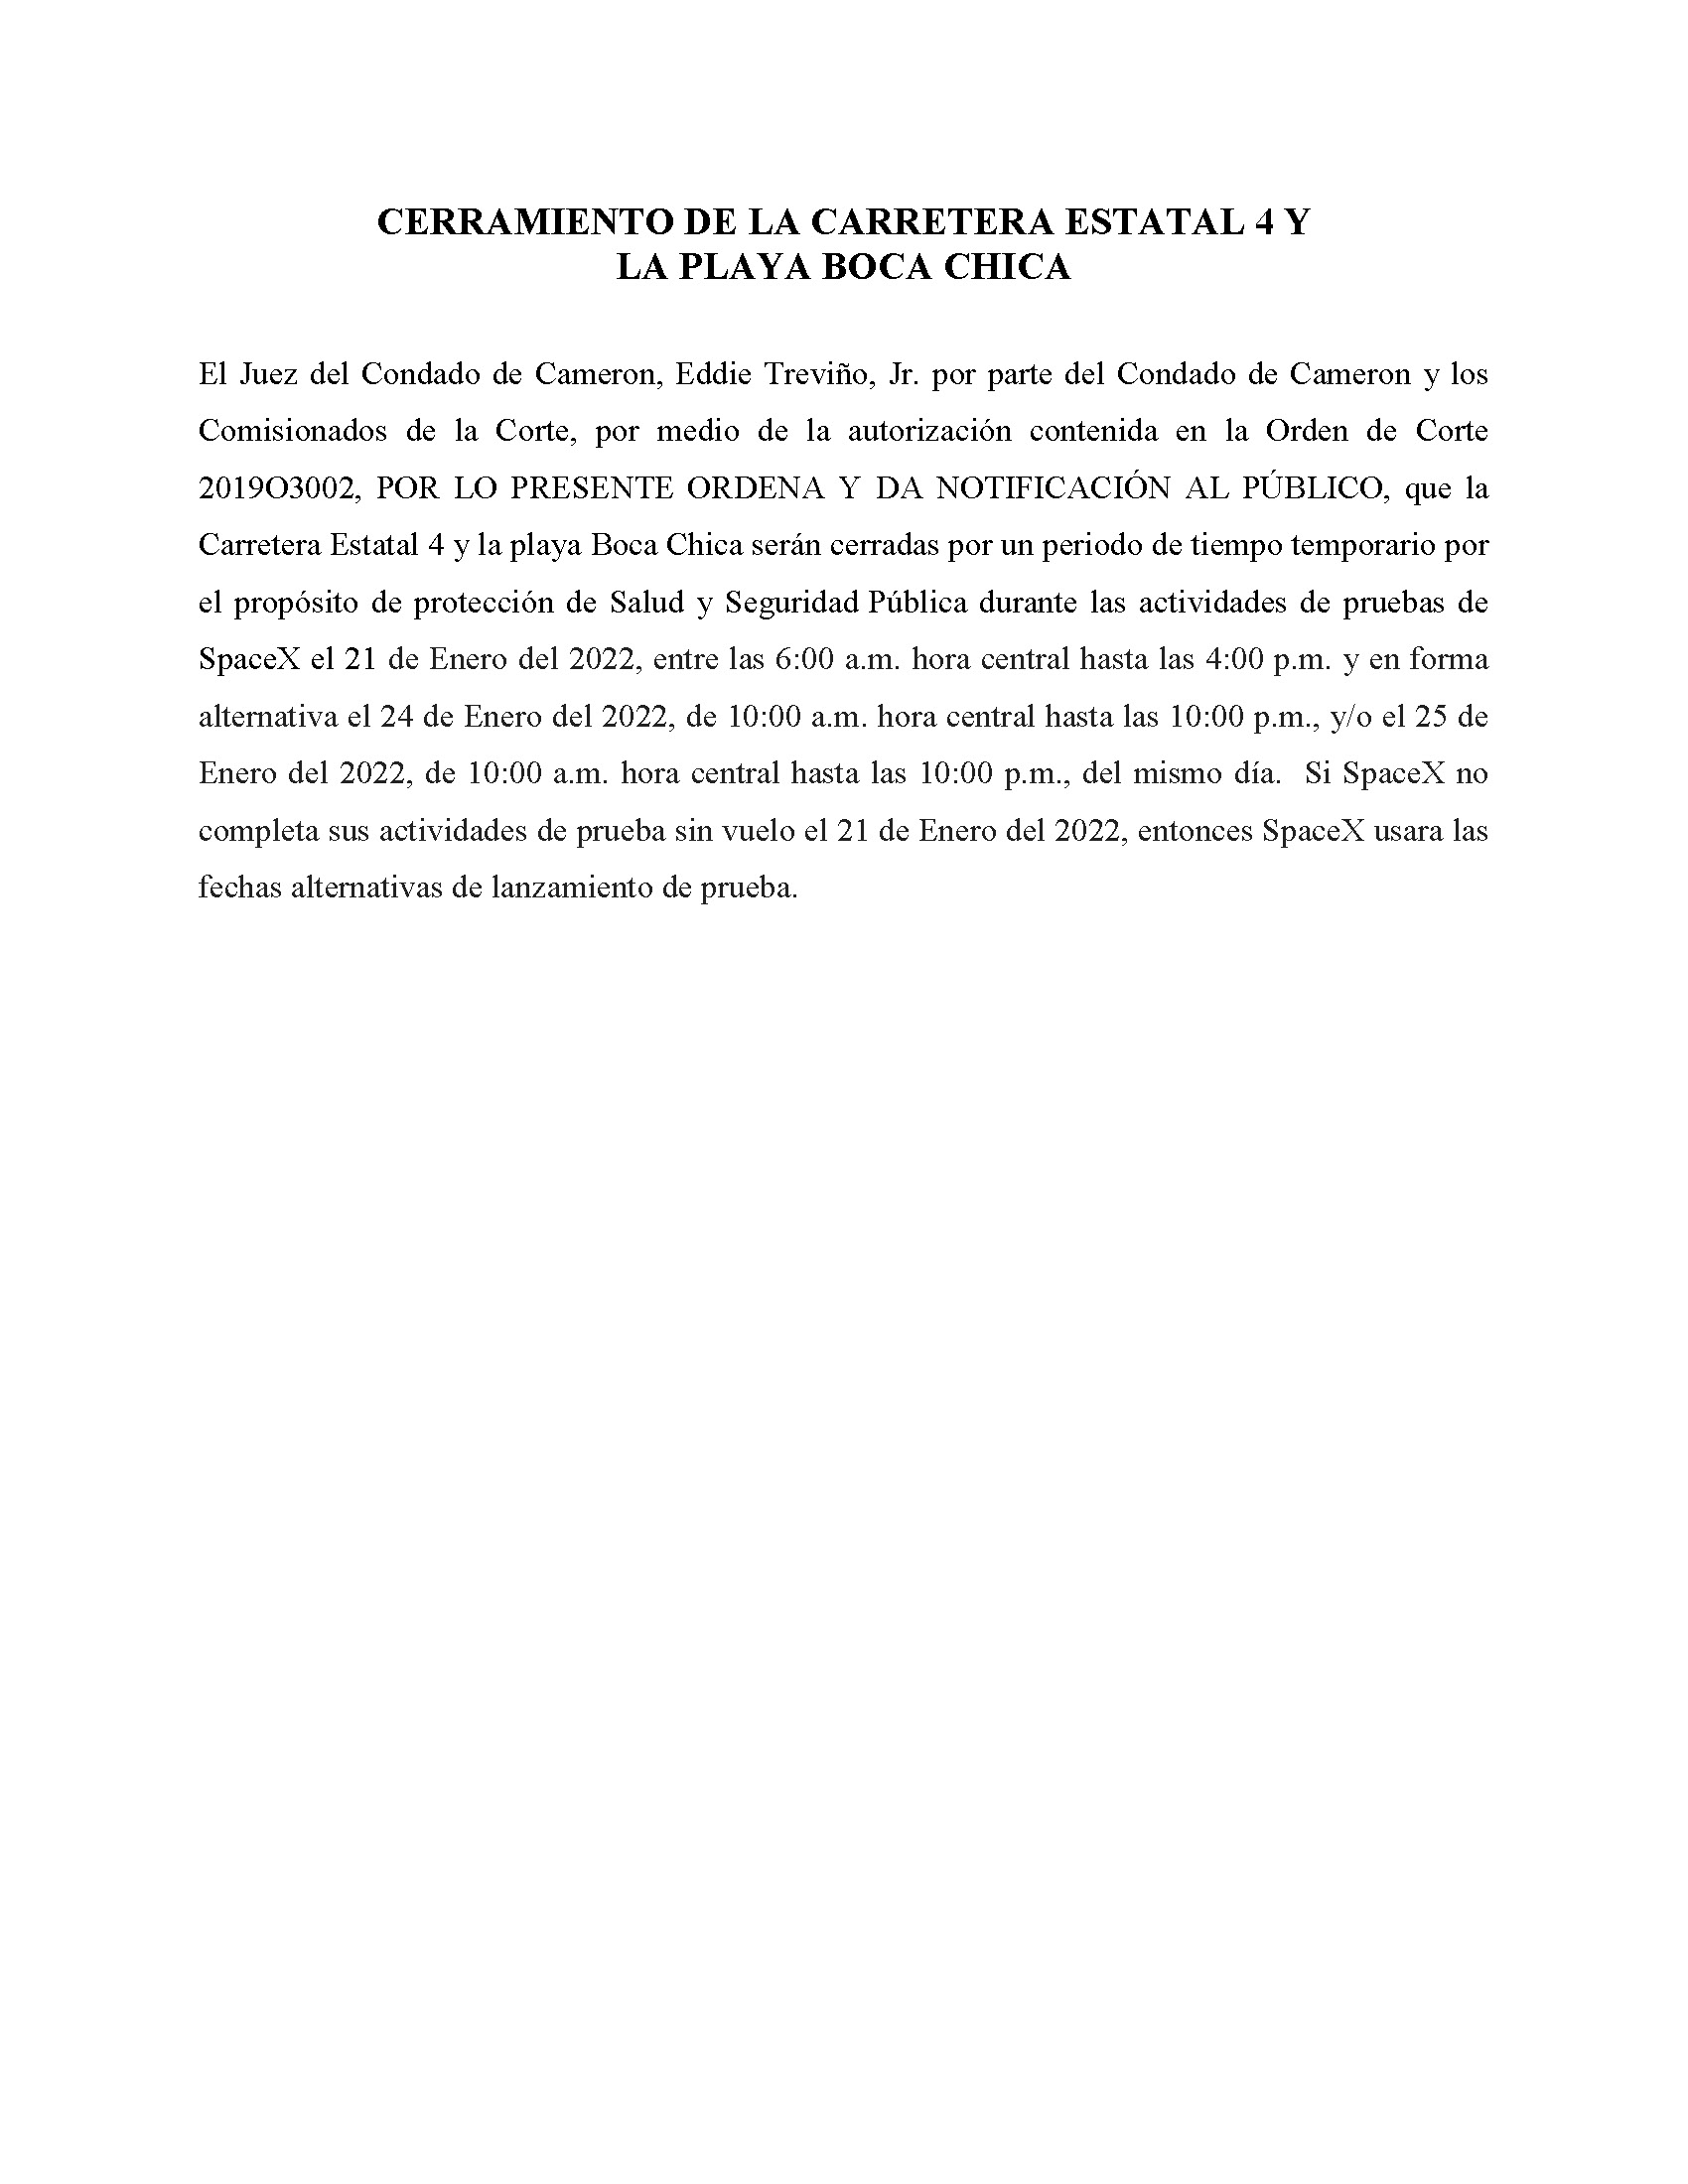 ORDER.CLOSURE OF HIGHWAY 4 Y LA PLAYA BOCA CHICA.SPANISH.01.21.2022